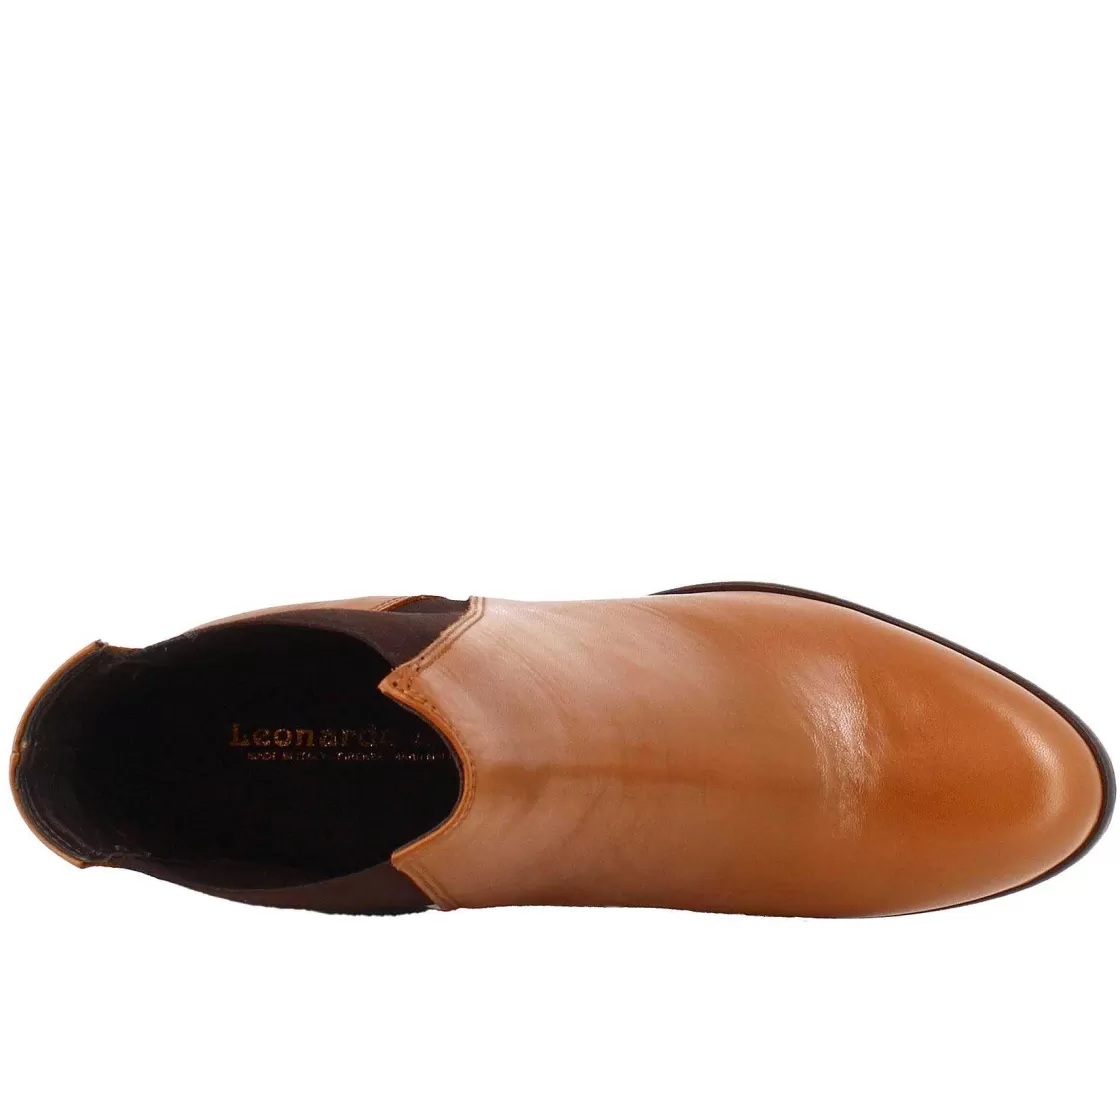 Leonardo Women'S Handmade Heeled Ankle Boots In Tan Calf Leather Best